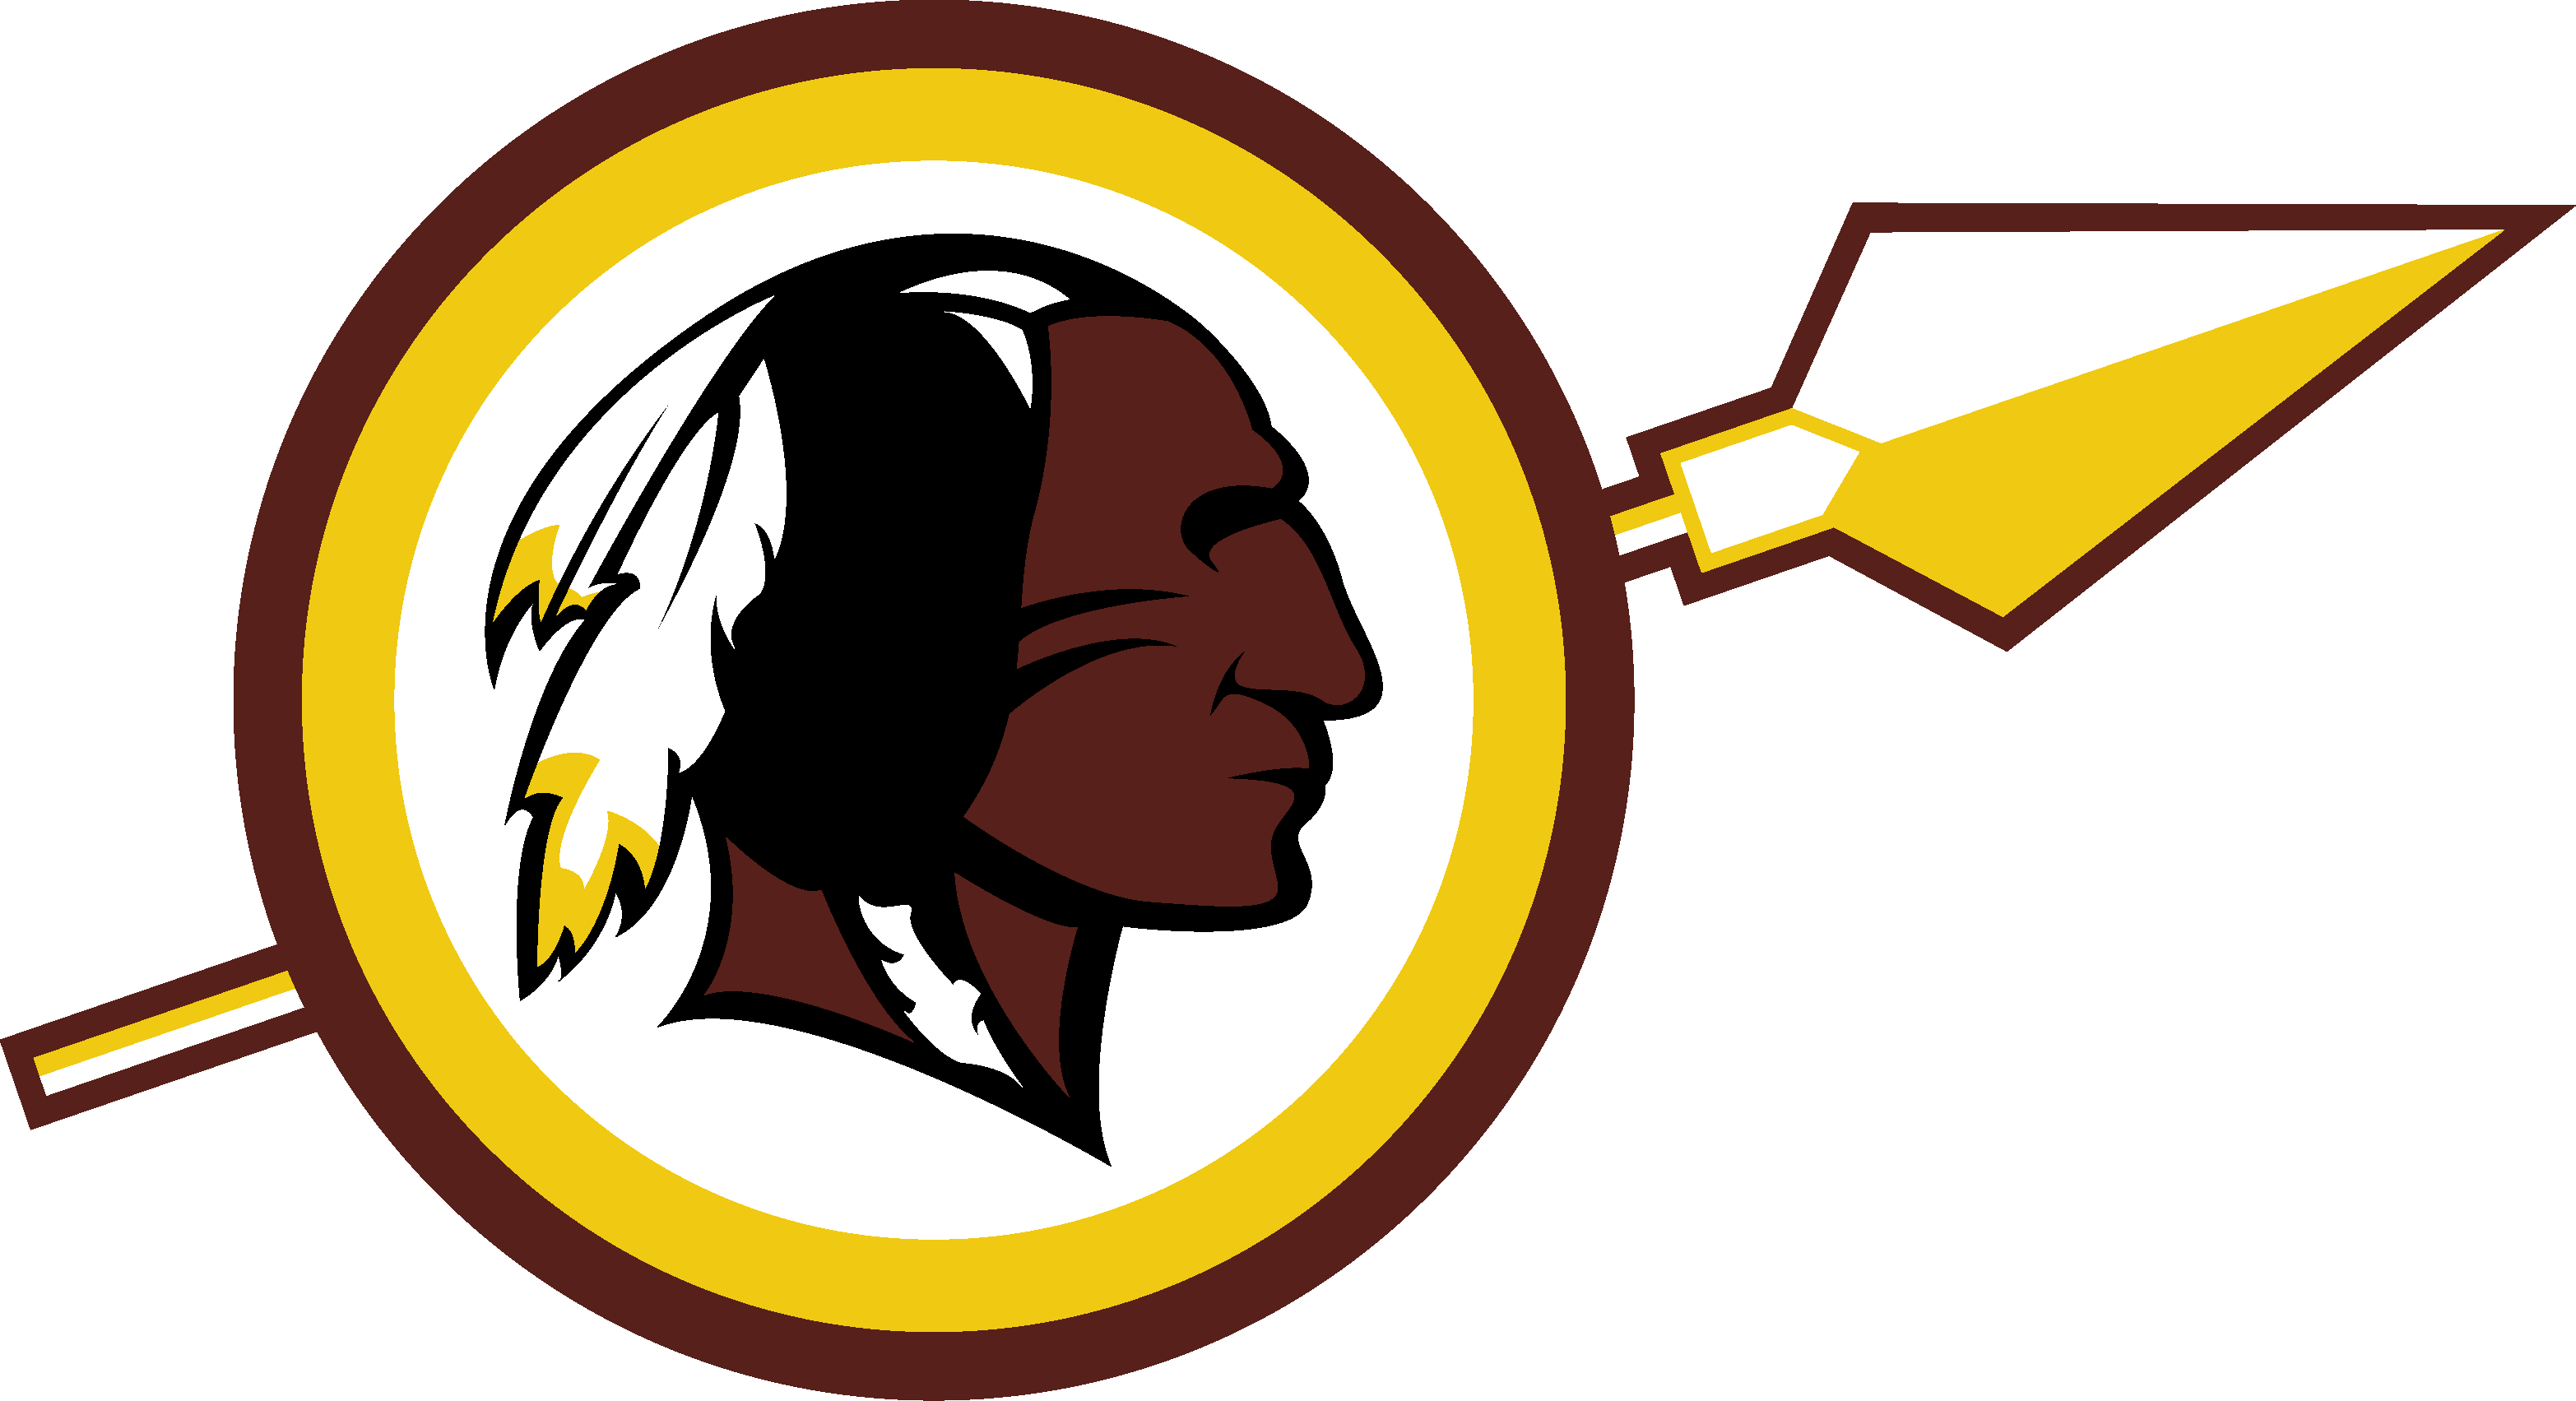 Redskins Logo - New Washington Redskins logo - Concepts - Chris Creamer's Sports ...